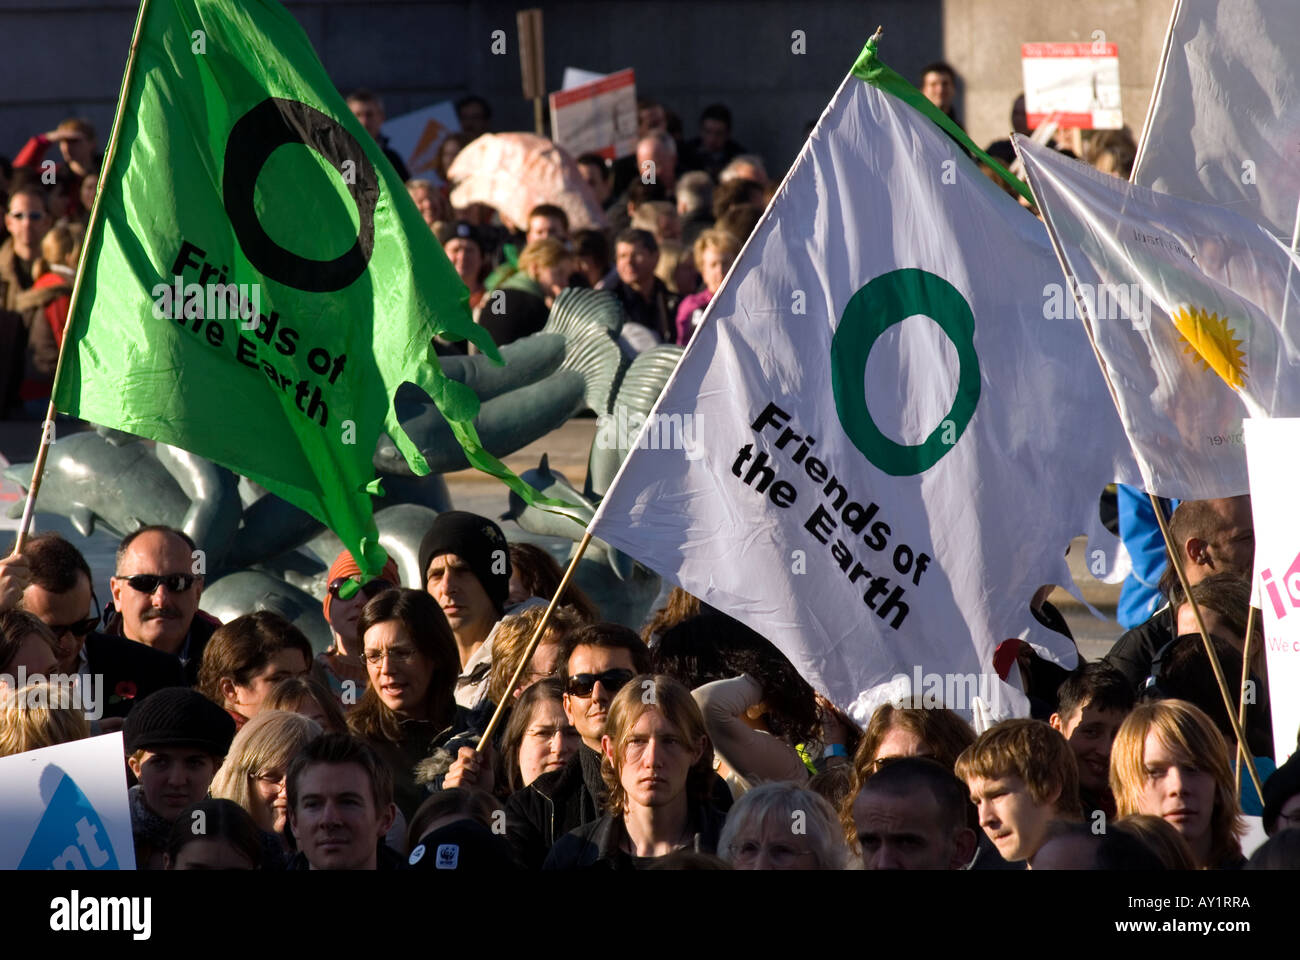 Stop Climate Chaos, I Count rally, Trafalgar Square, London, UK, Saturday November 4th, 2006. Stock Photo